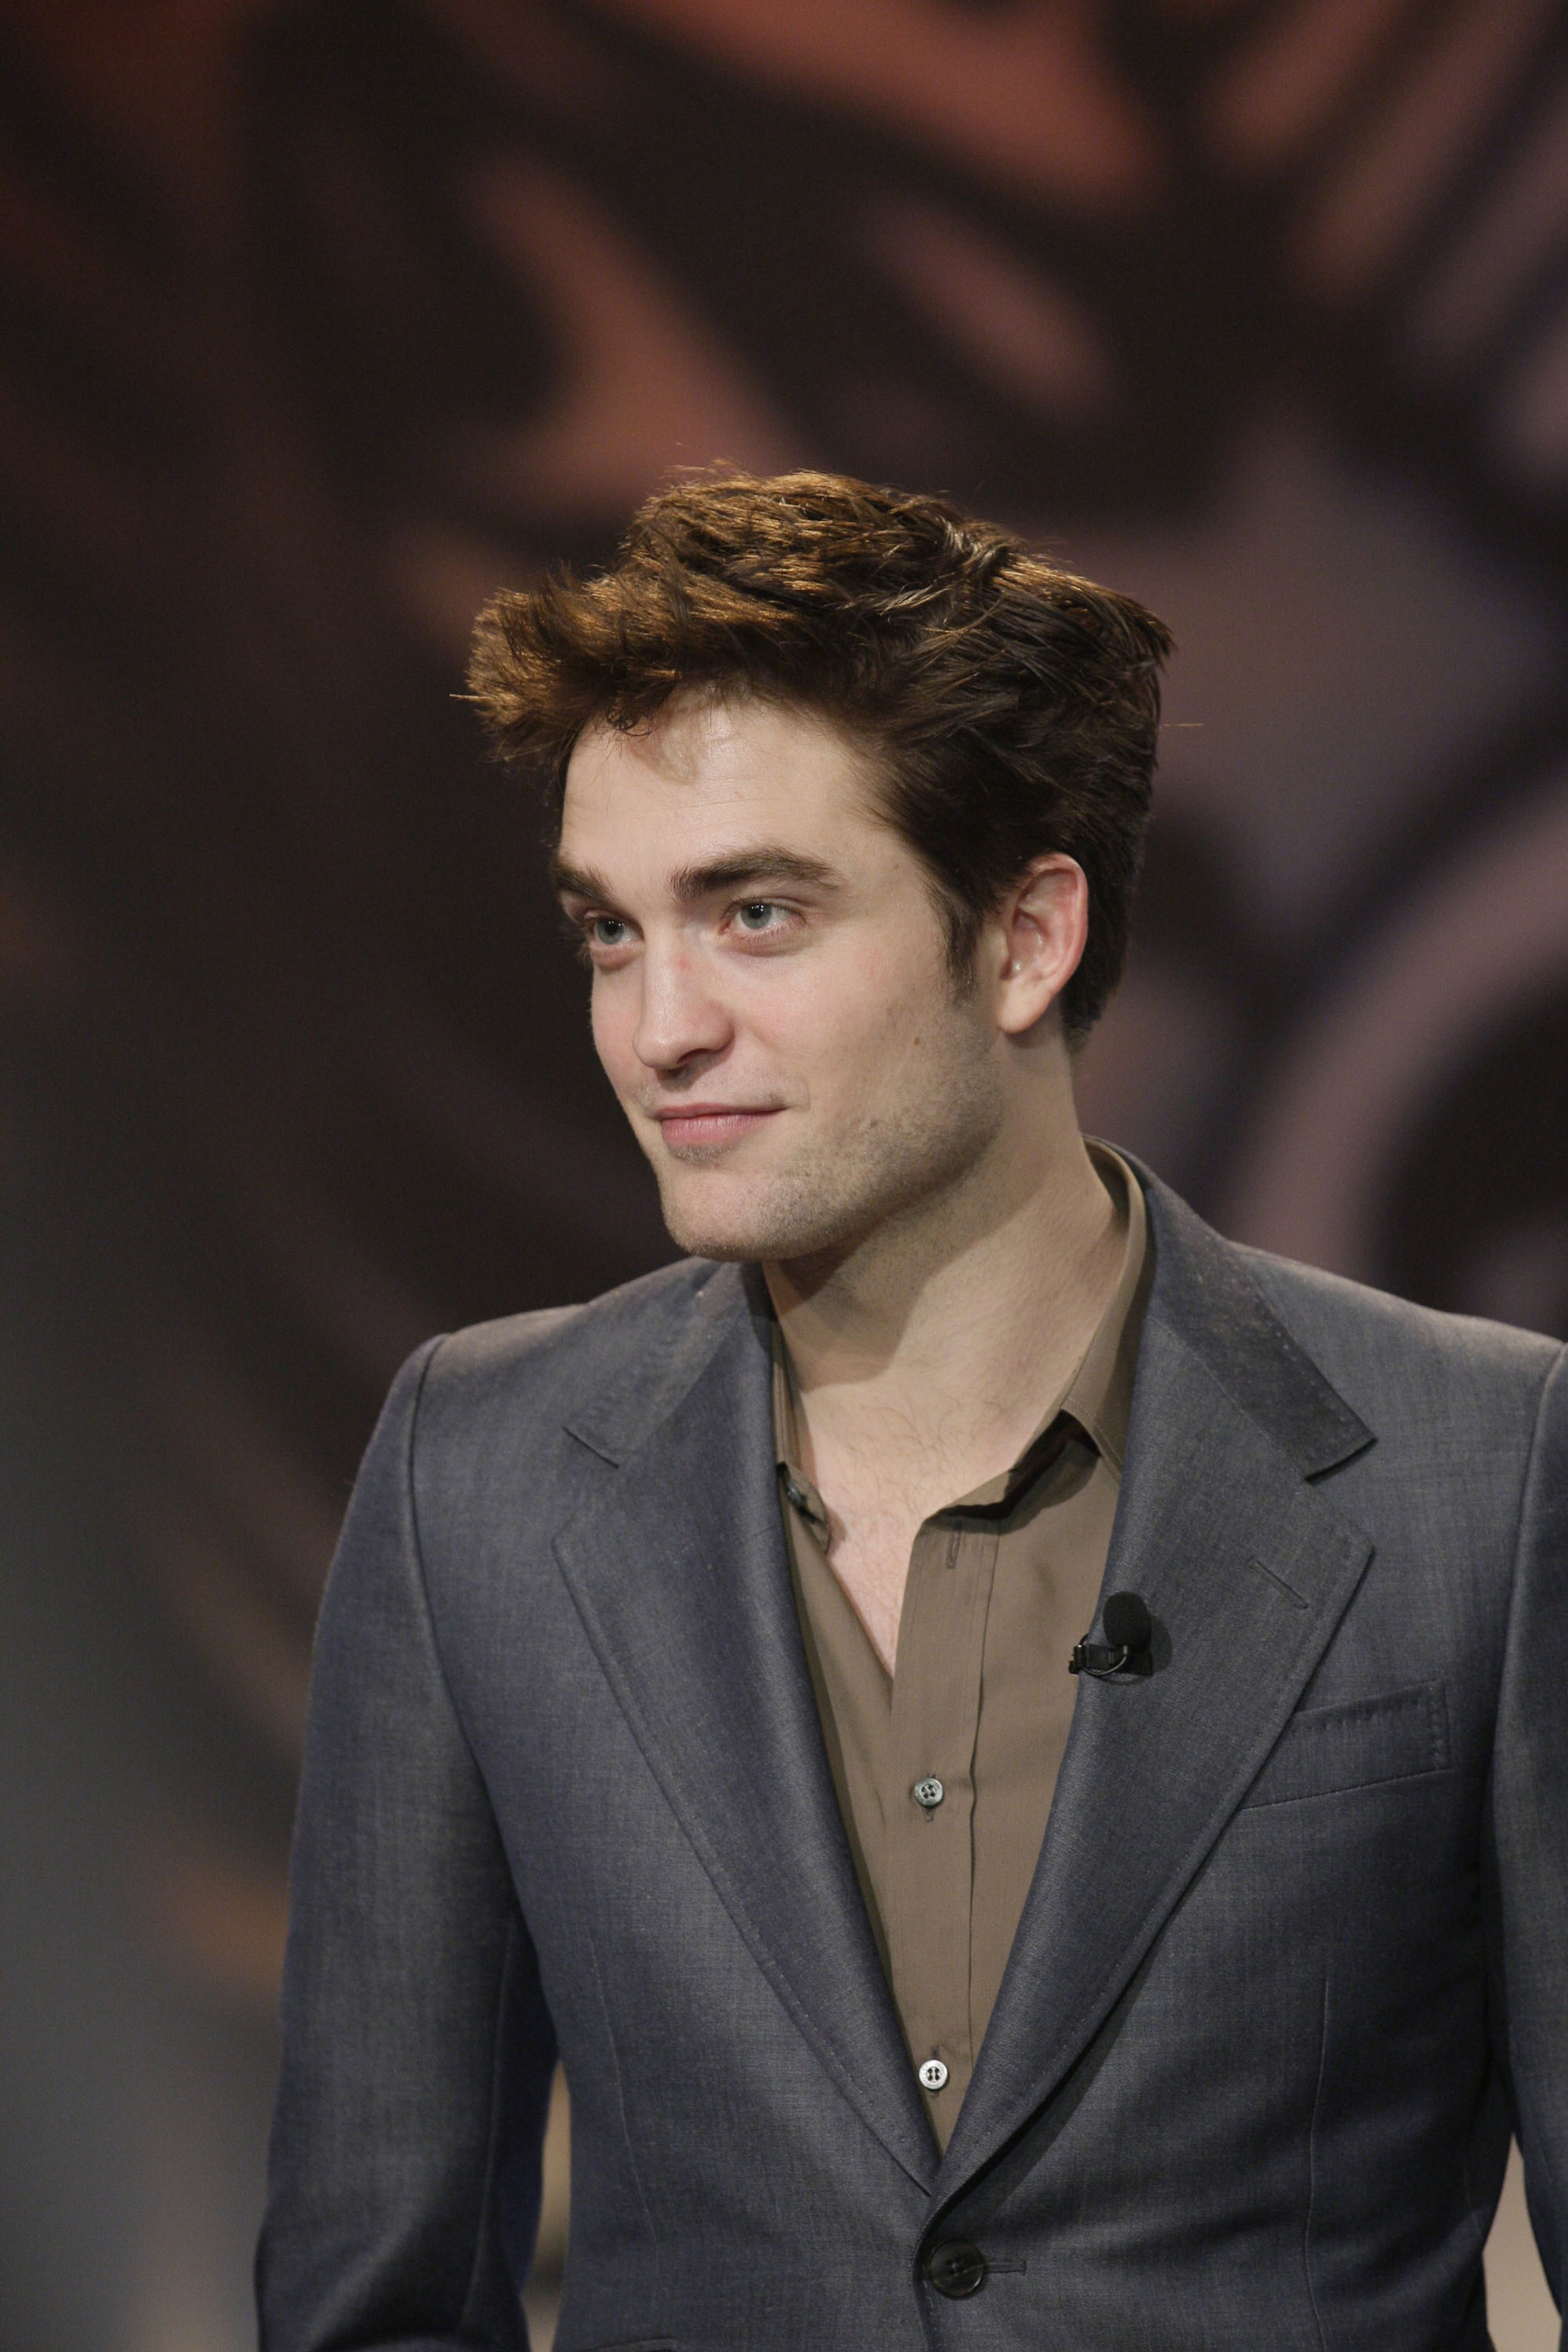 Robert Pattinson - Twilight Series Photo (25883284) - Fanpop1707 x 2560